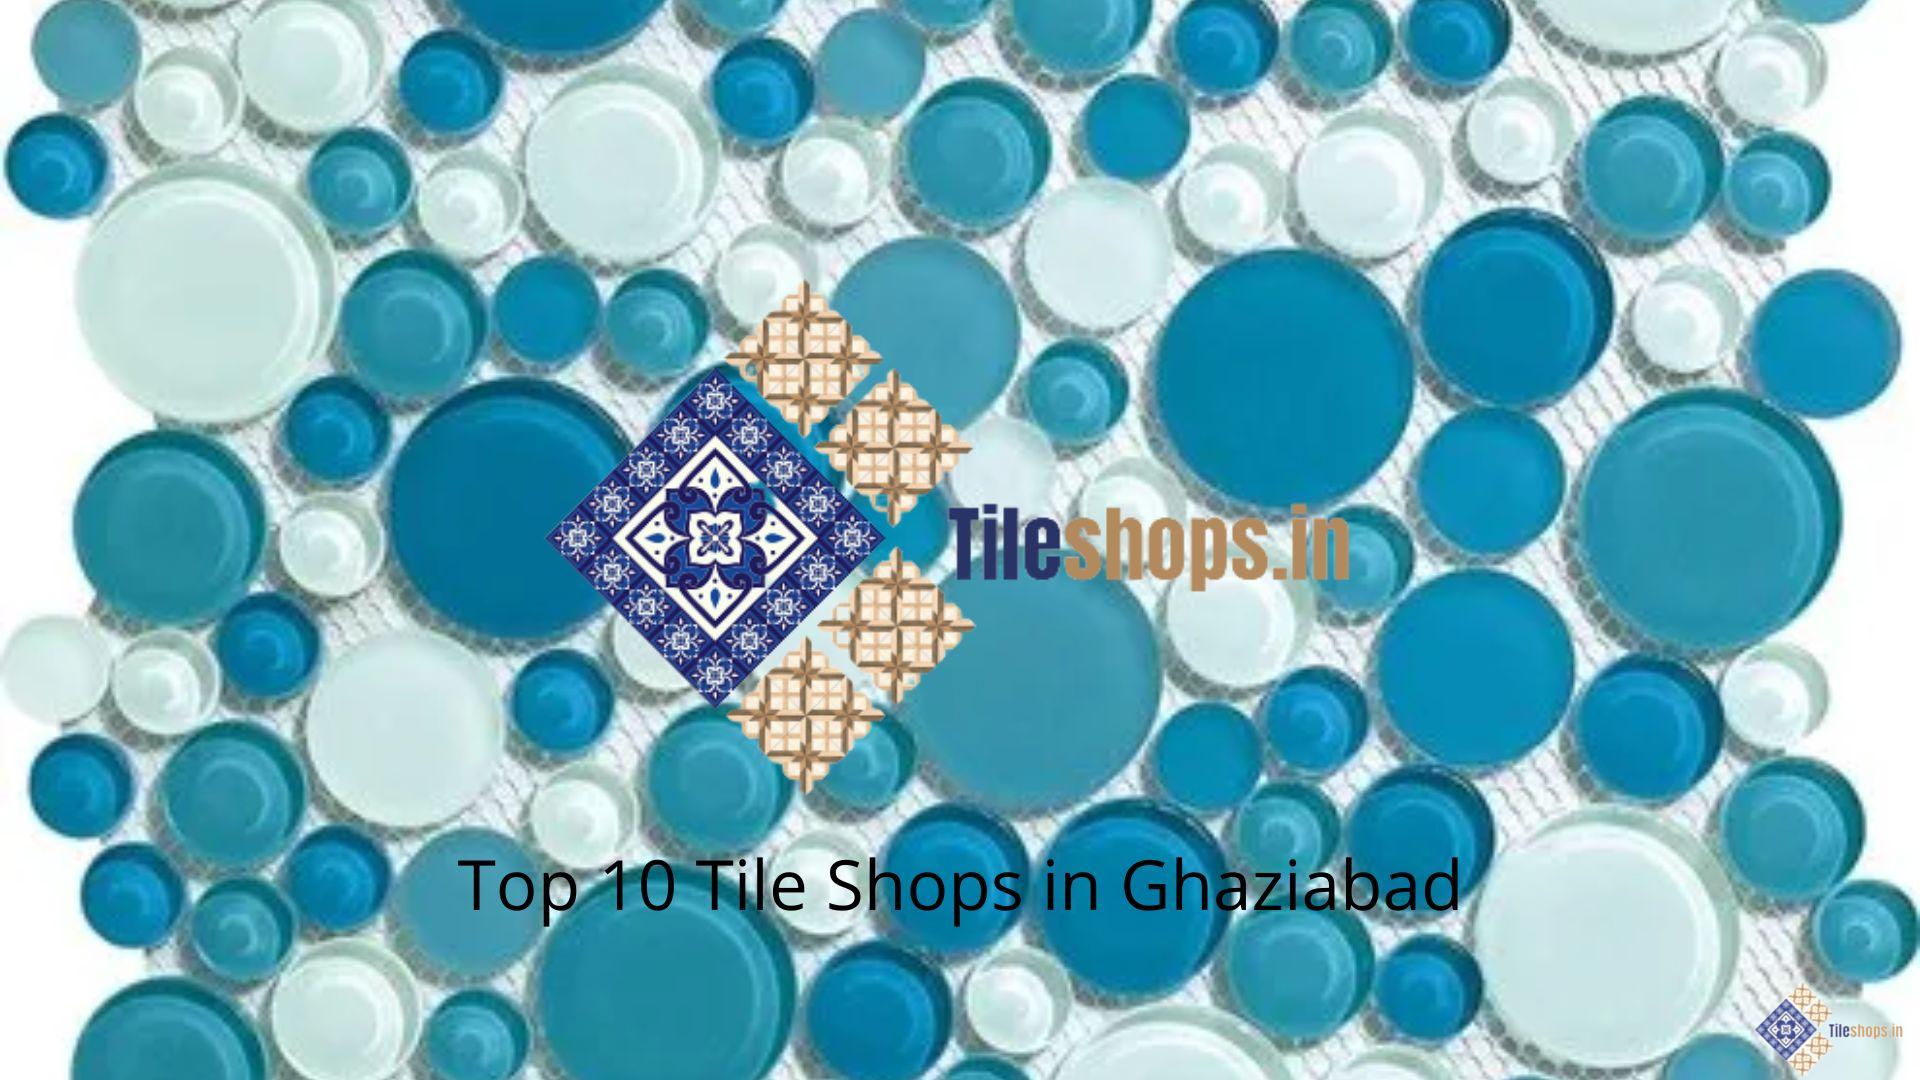 Top 10 Tile Shops in Ghaziabad